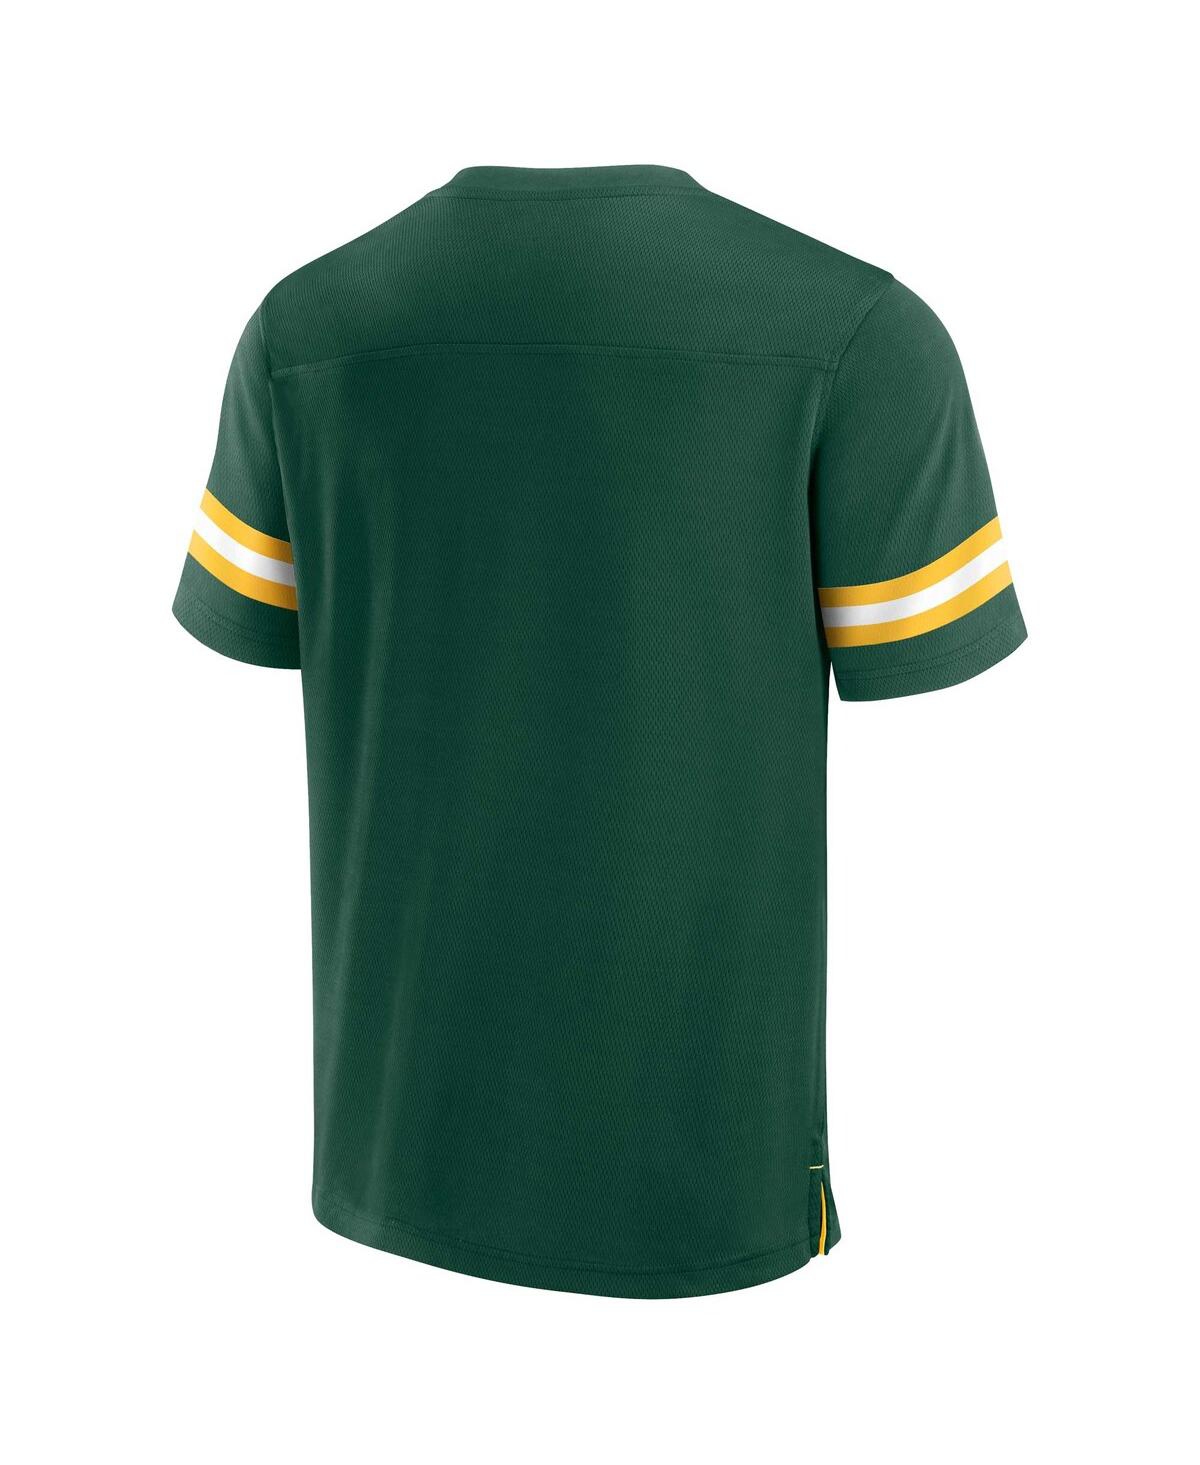 Shop Fanatics Men's  Green Green Bay Packers Jersey Tackle V-neck T-shirt